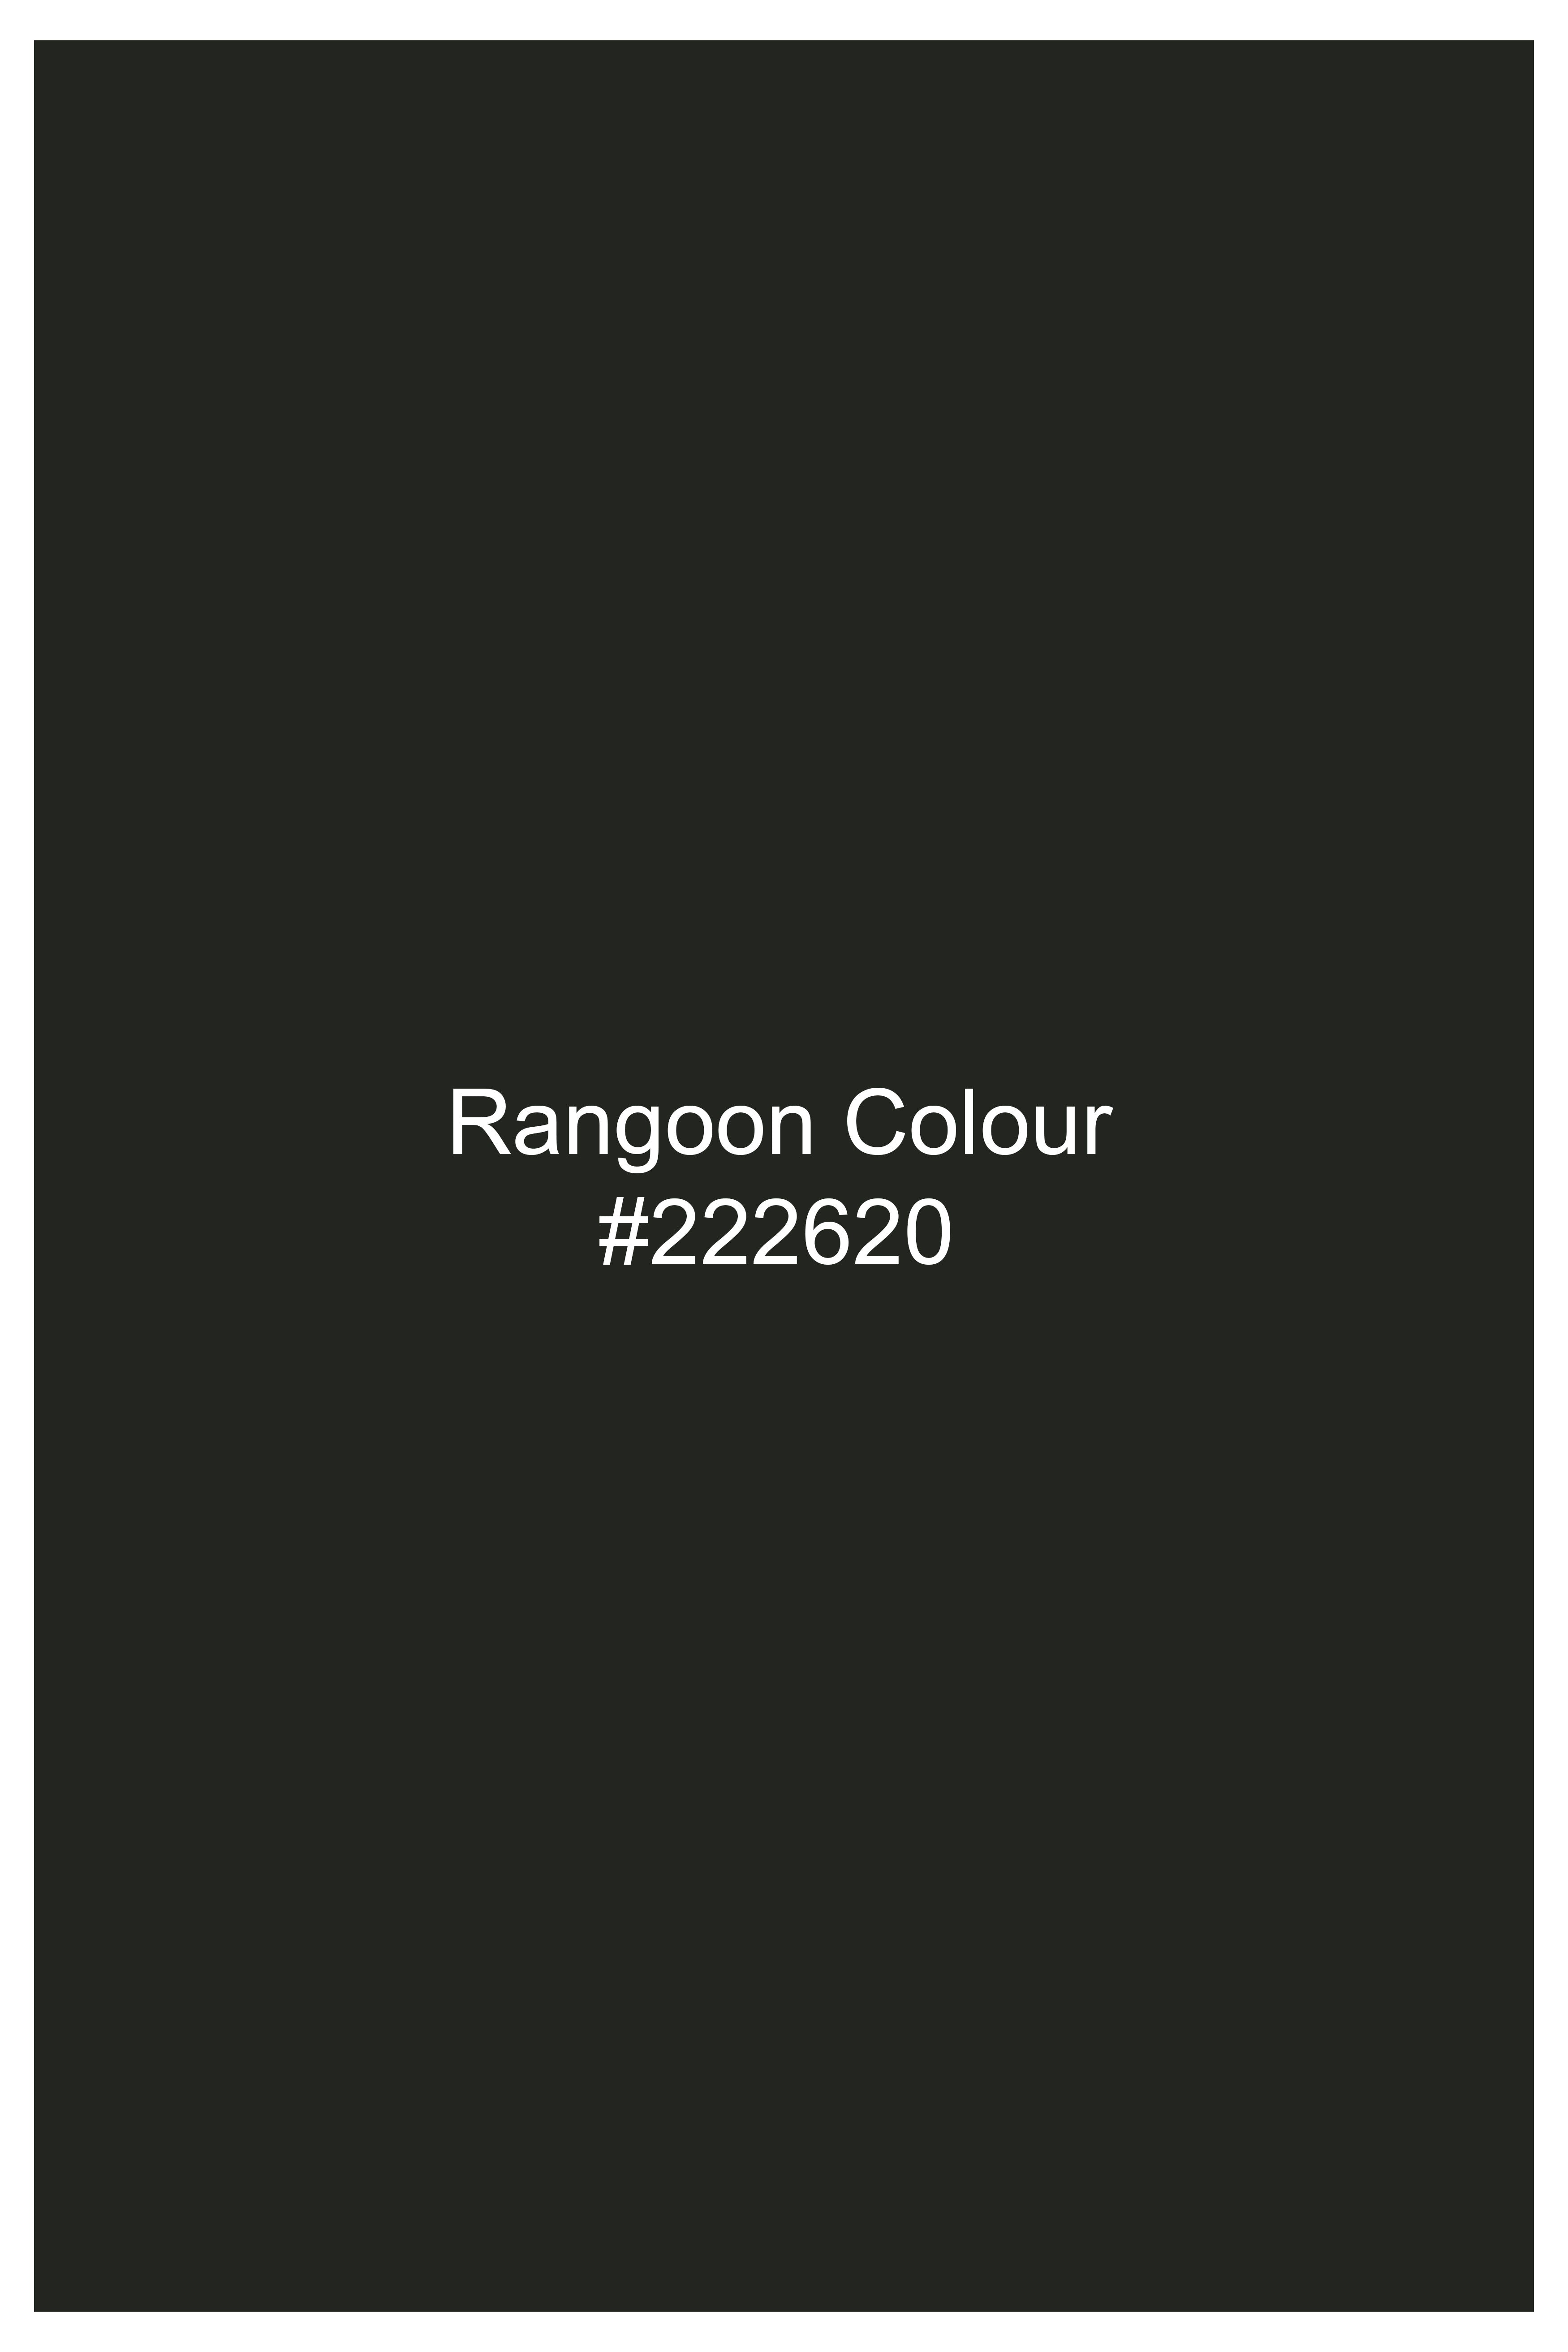 Rangoon Green Wool Rich Bandhgala Designer Blazer BL2807-D1-36, BL2807-D1-38, BL2807-D1-40, BL2807-D1-42, BL2807-D1-44, BL2807-D1-46, BL2807-D1-48, BL2807-D1-50, BL2807-D1-52, BL2807-D1-54, BL2807-D1-56, BL2807-D1-58, BL2807-D1-60